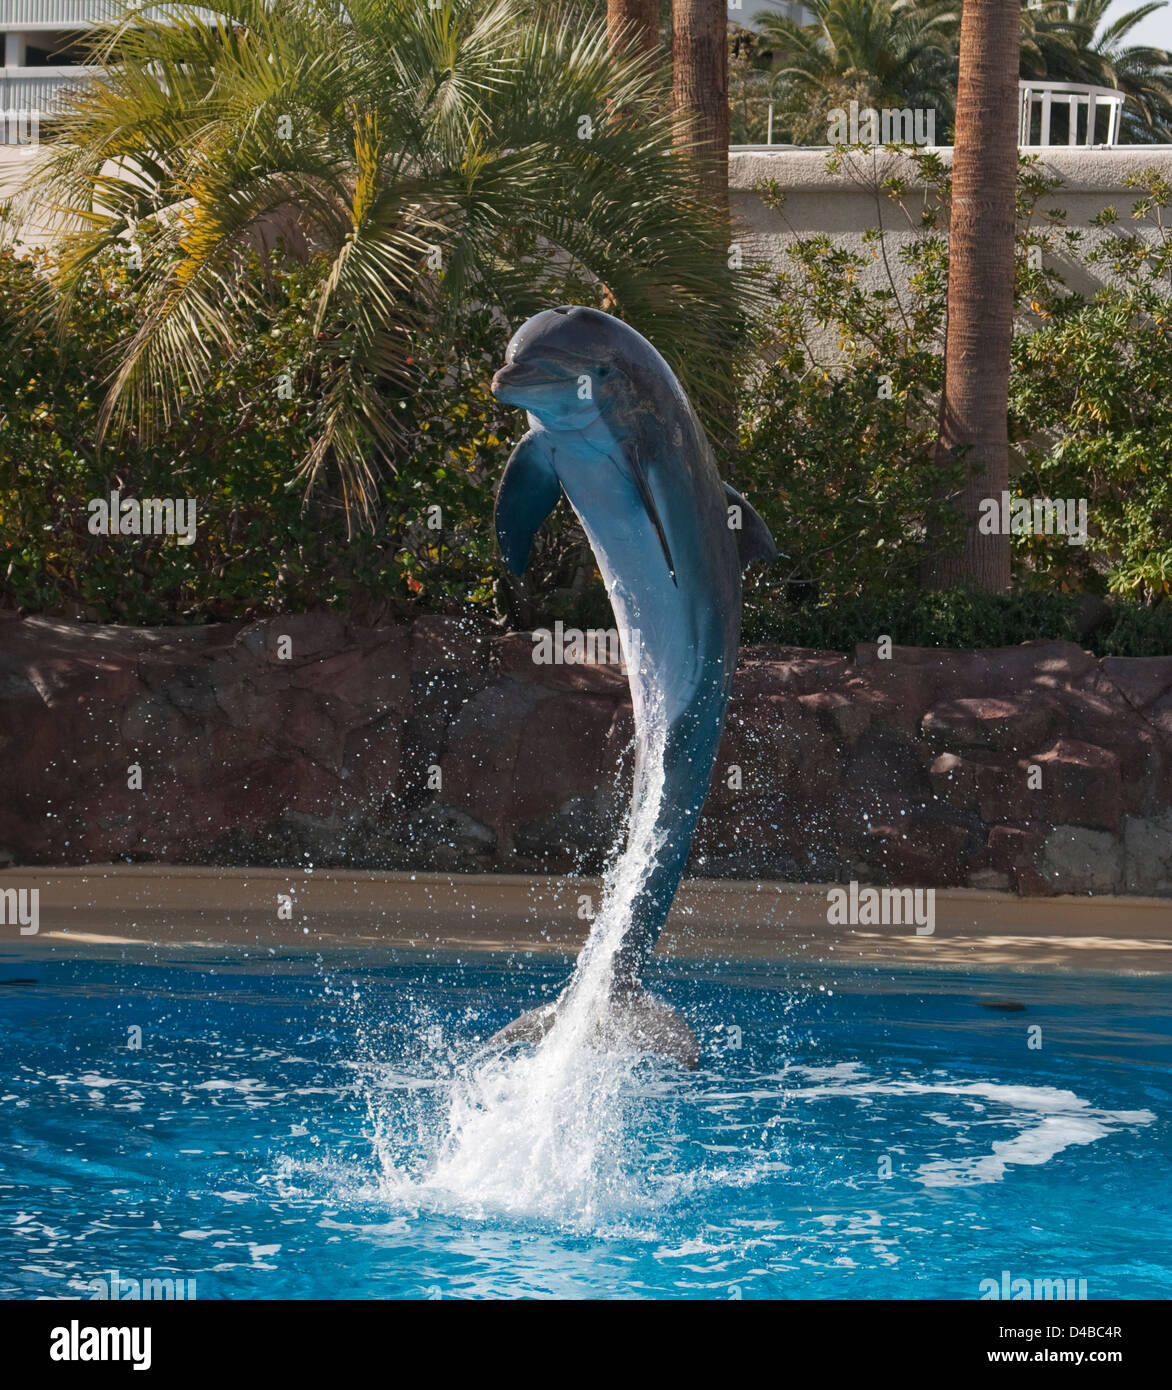 Jumping Dolphin at the Mirage Casino, Las Vegas Stock Photo